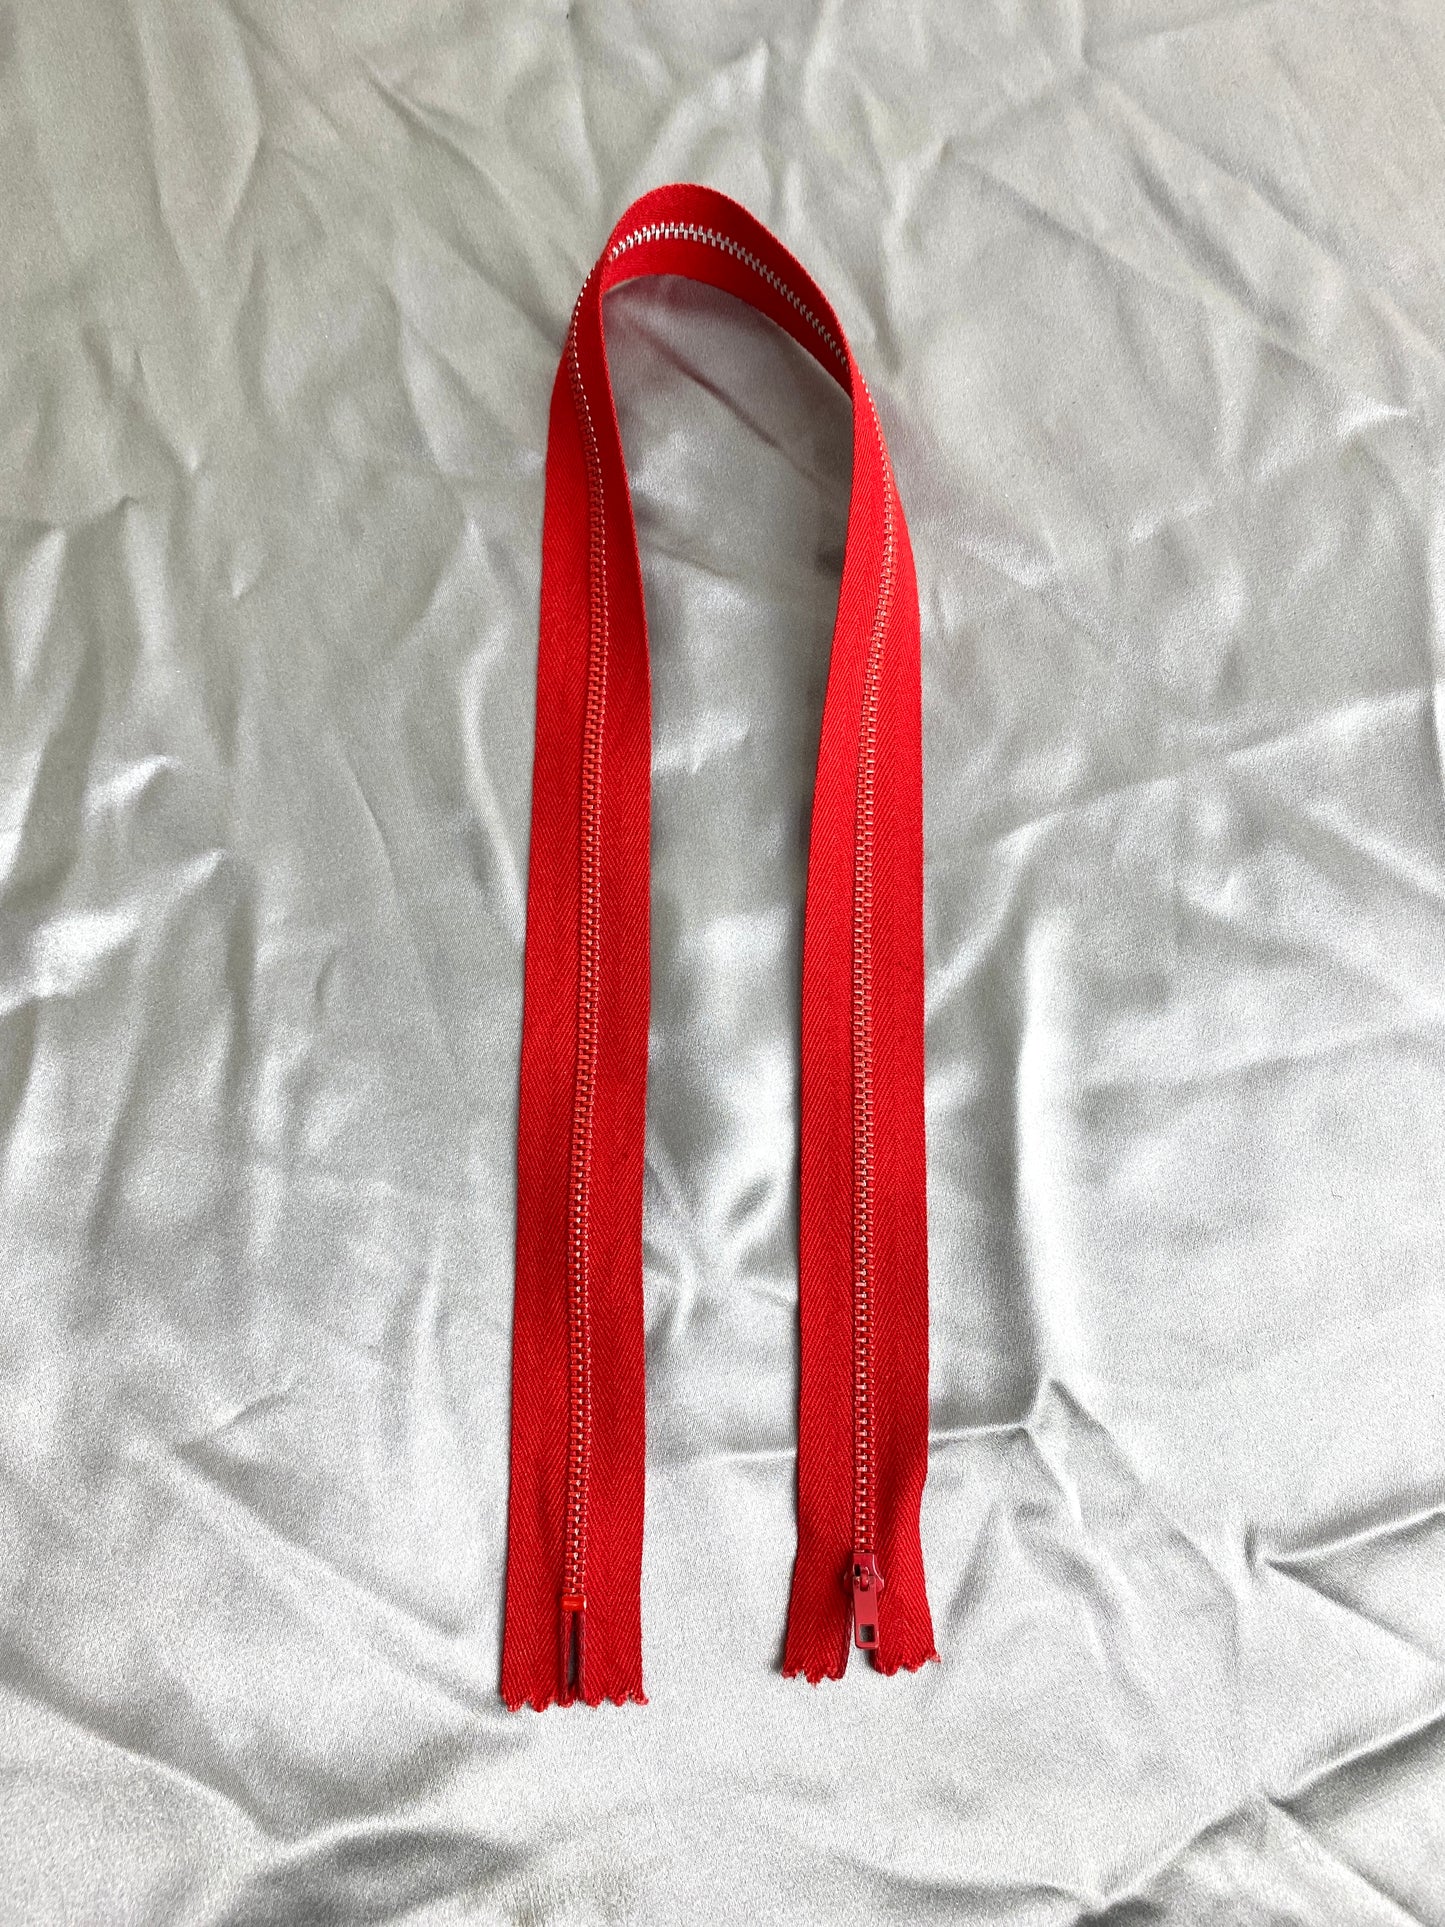 A single red metal vintage zipper. Ian Drummond Vintage.